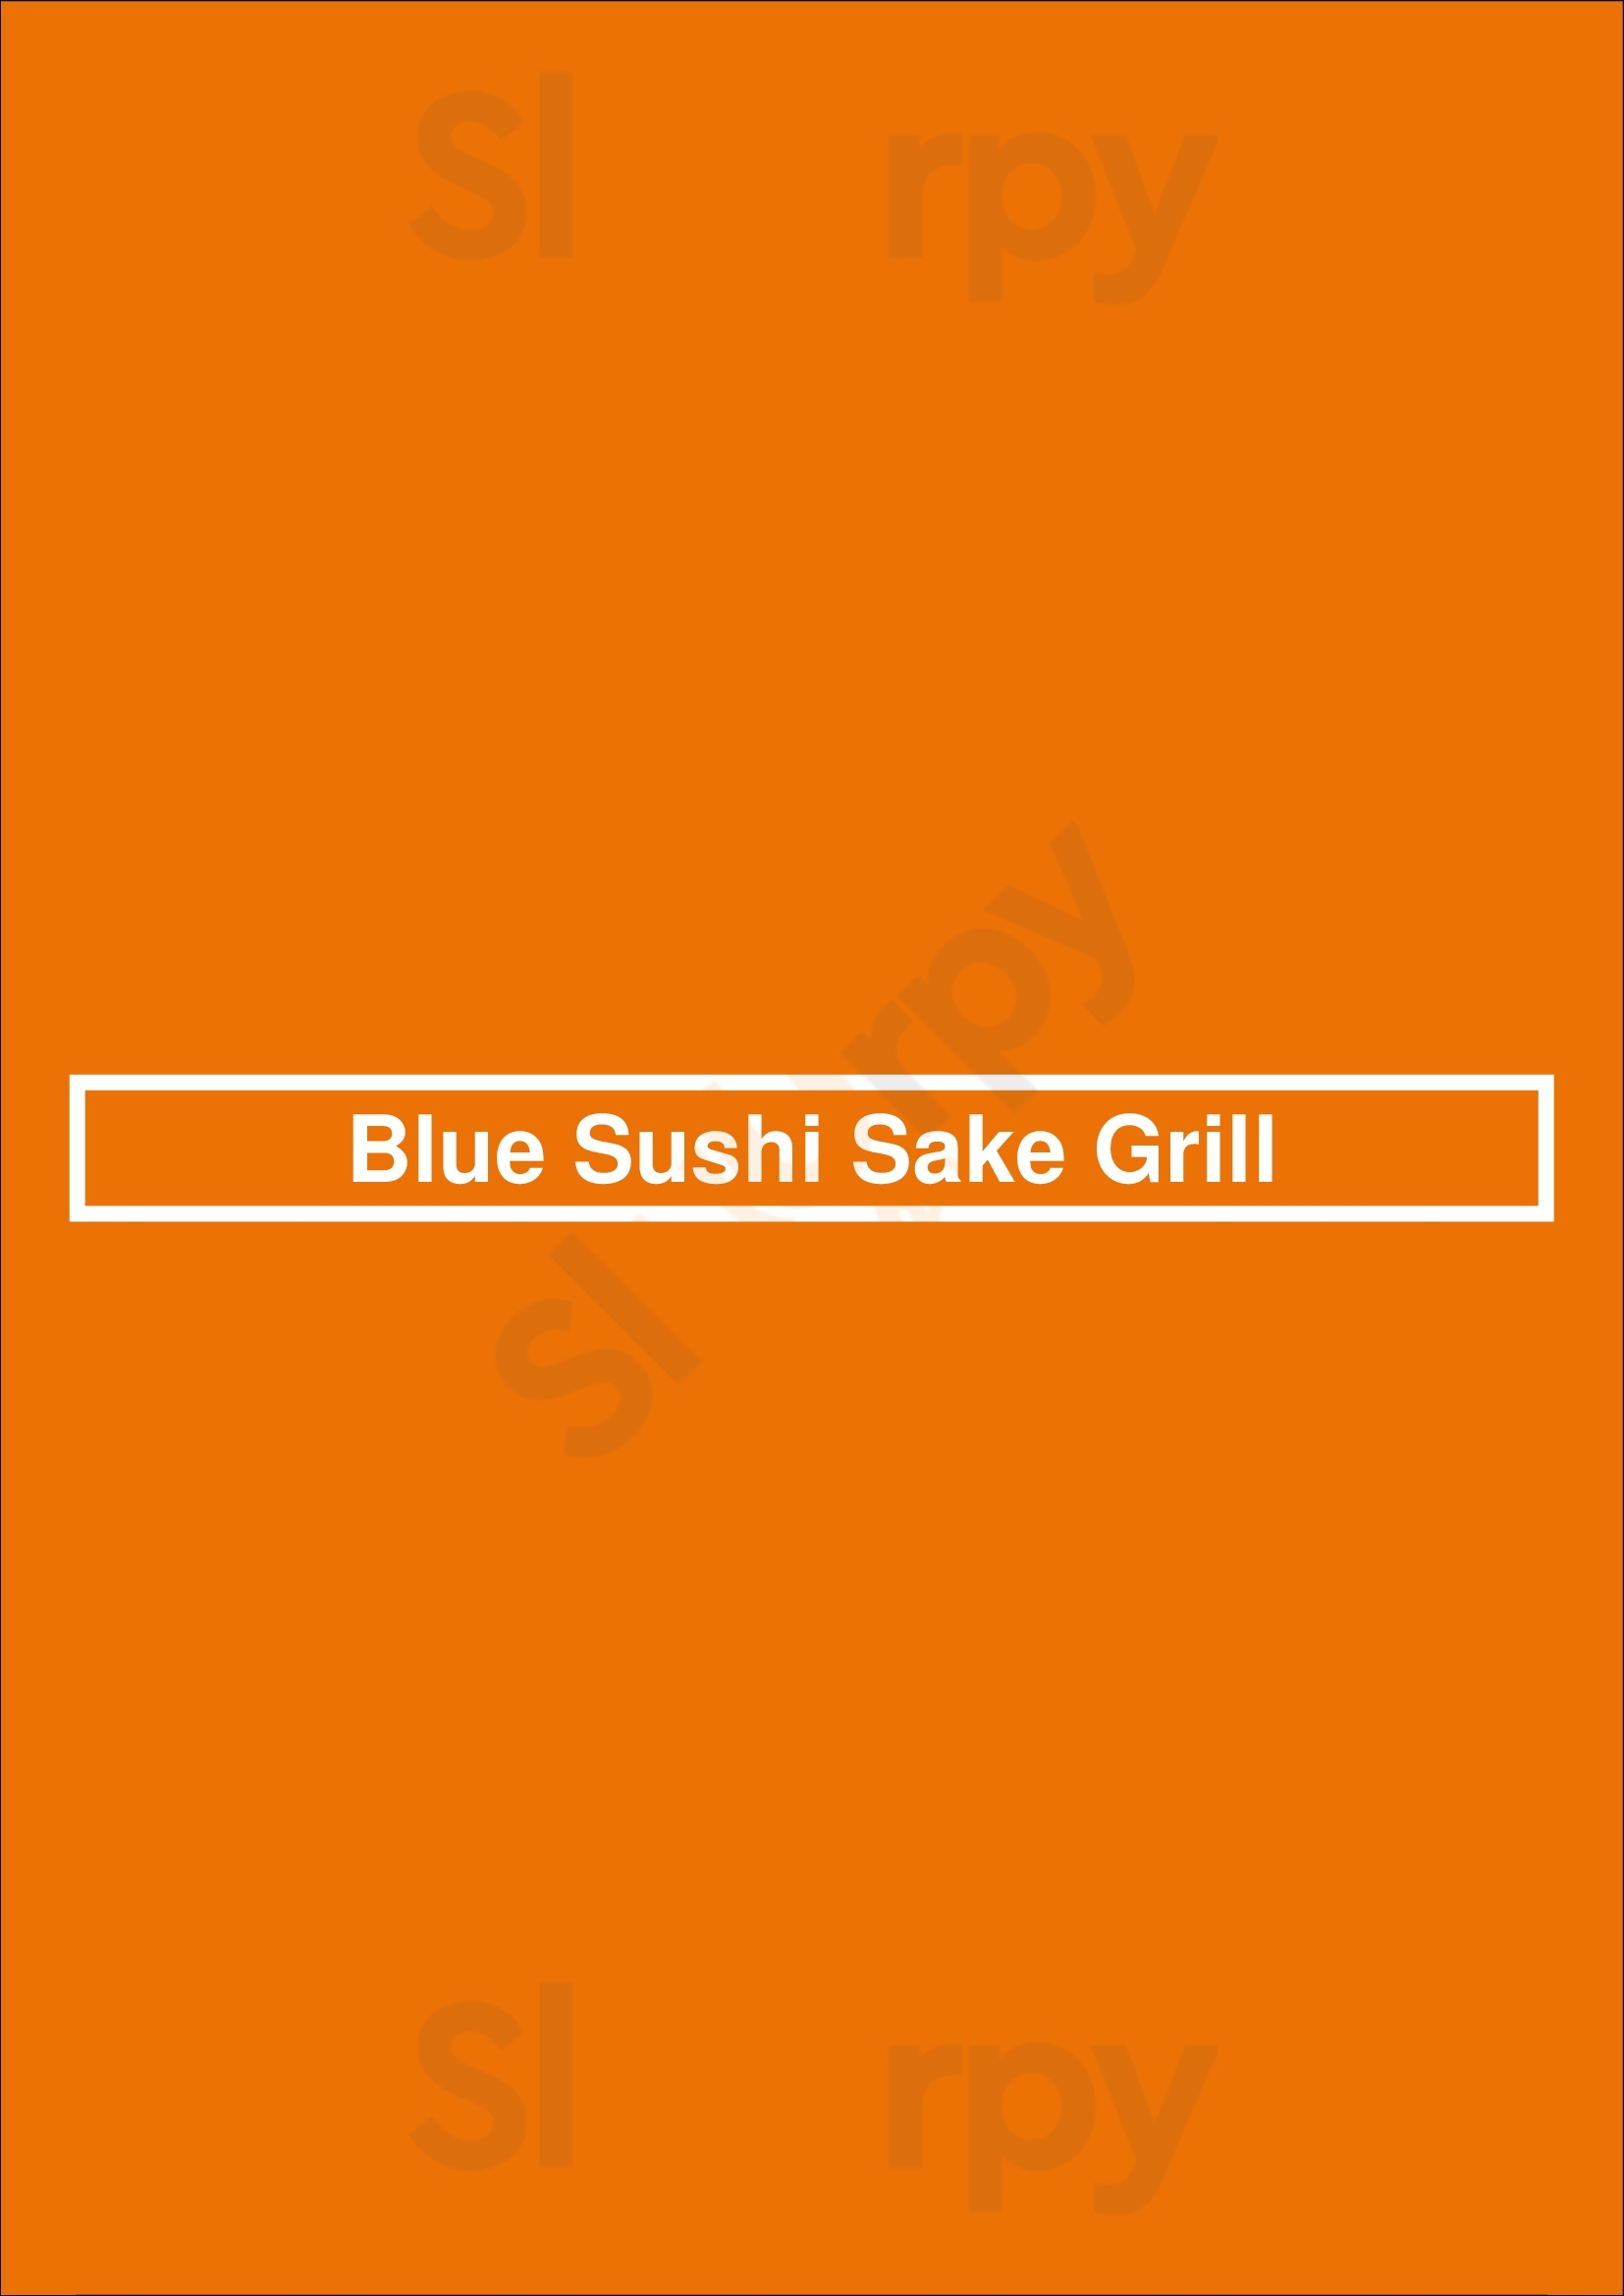 Blue Sushi Sake Grill Fort Worth Menu - 1